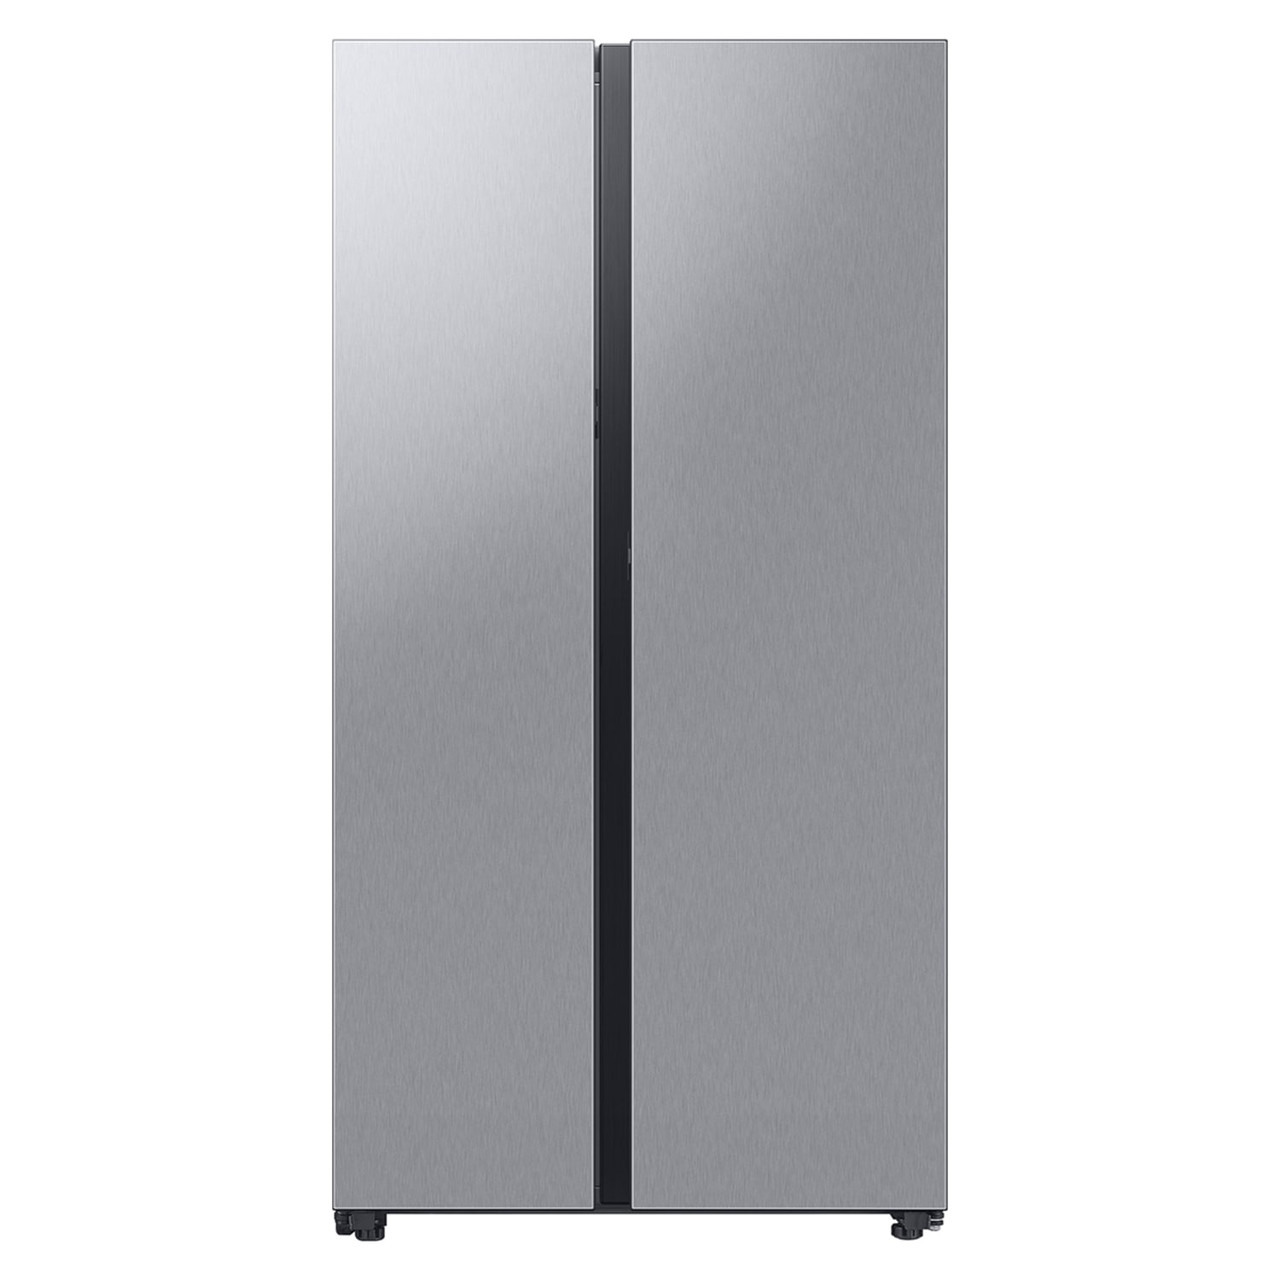 Samsung Bespoke 28 cu. ft. Smart Side-by-Side Refrigerator